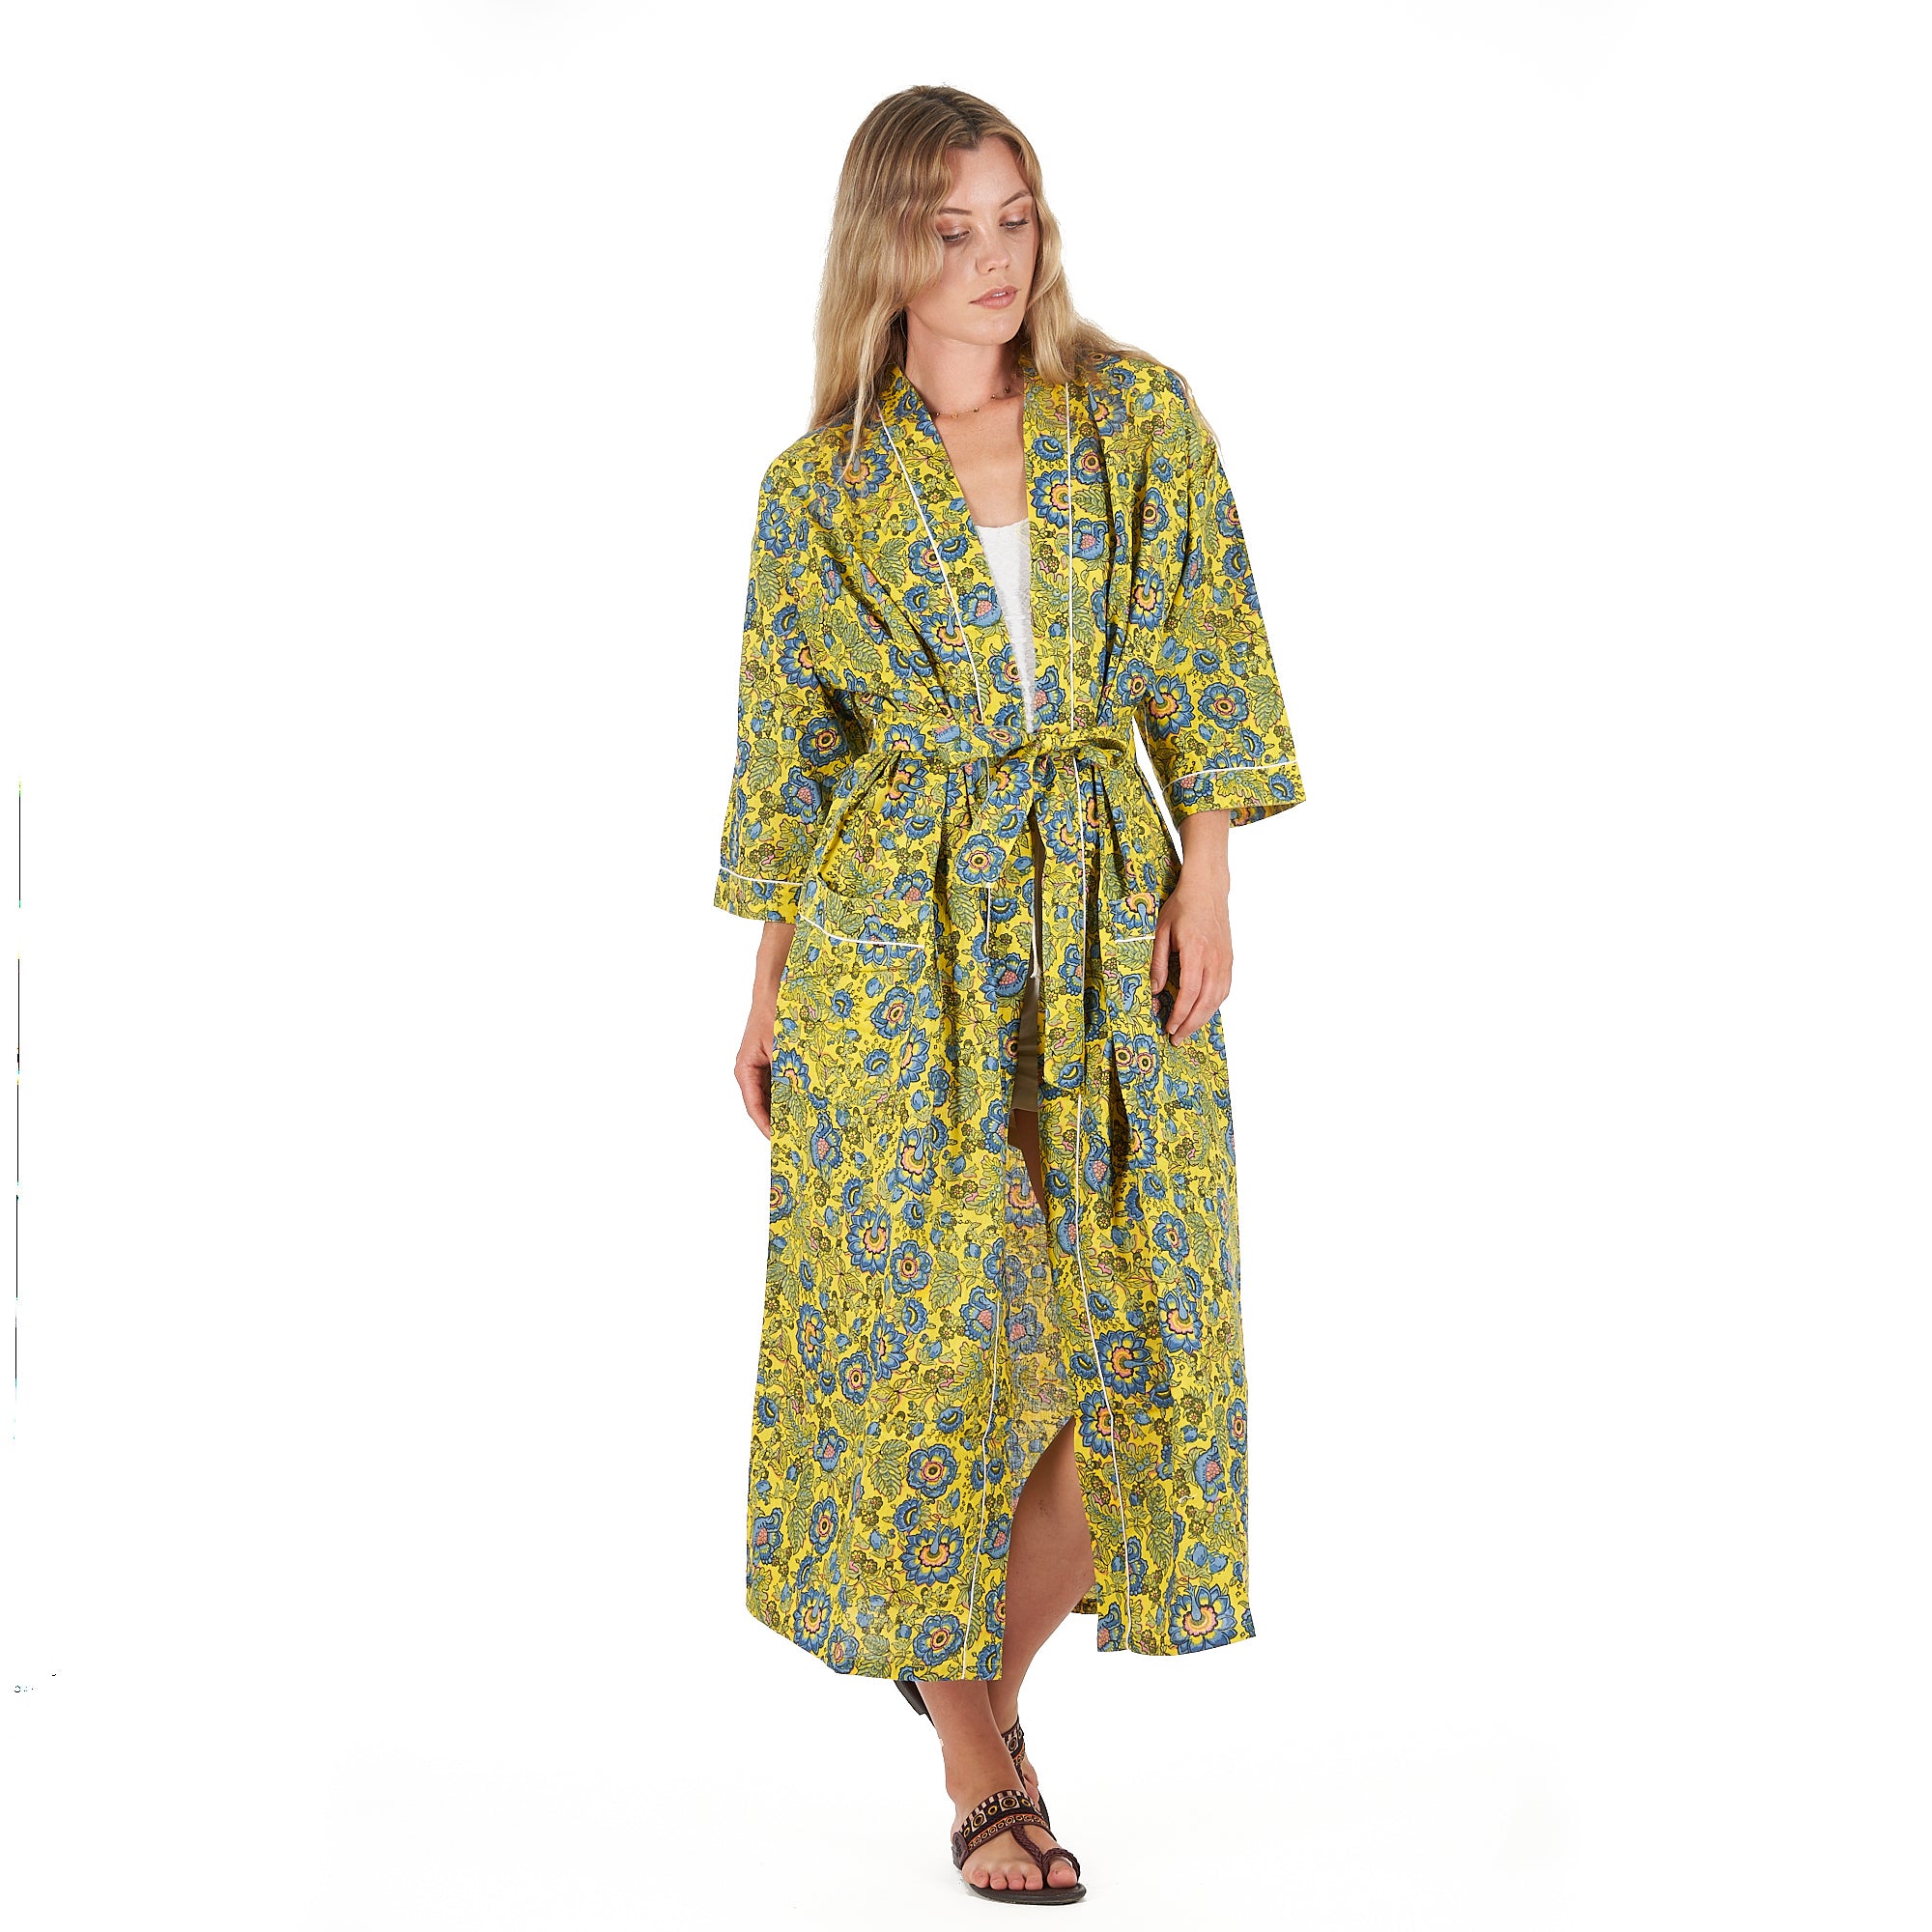 'Livin' the Cozy Life' 100% Cotton Kimono Robe